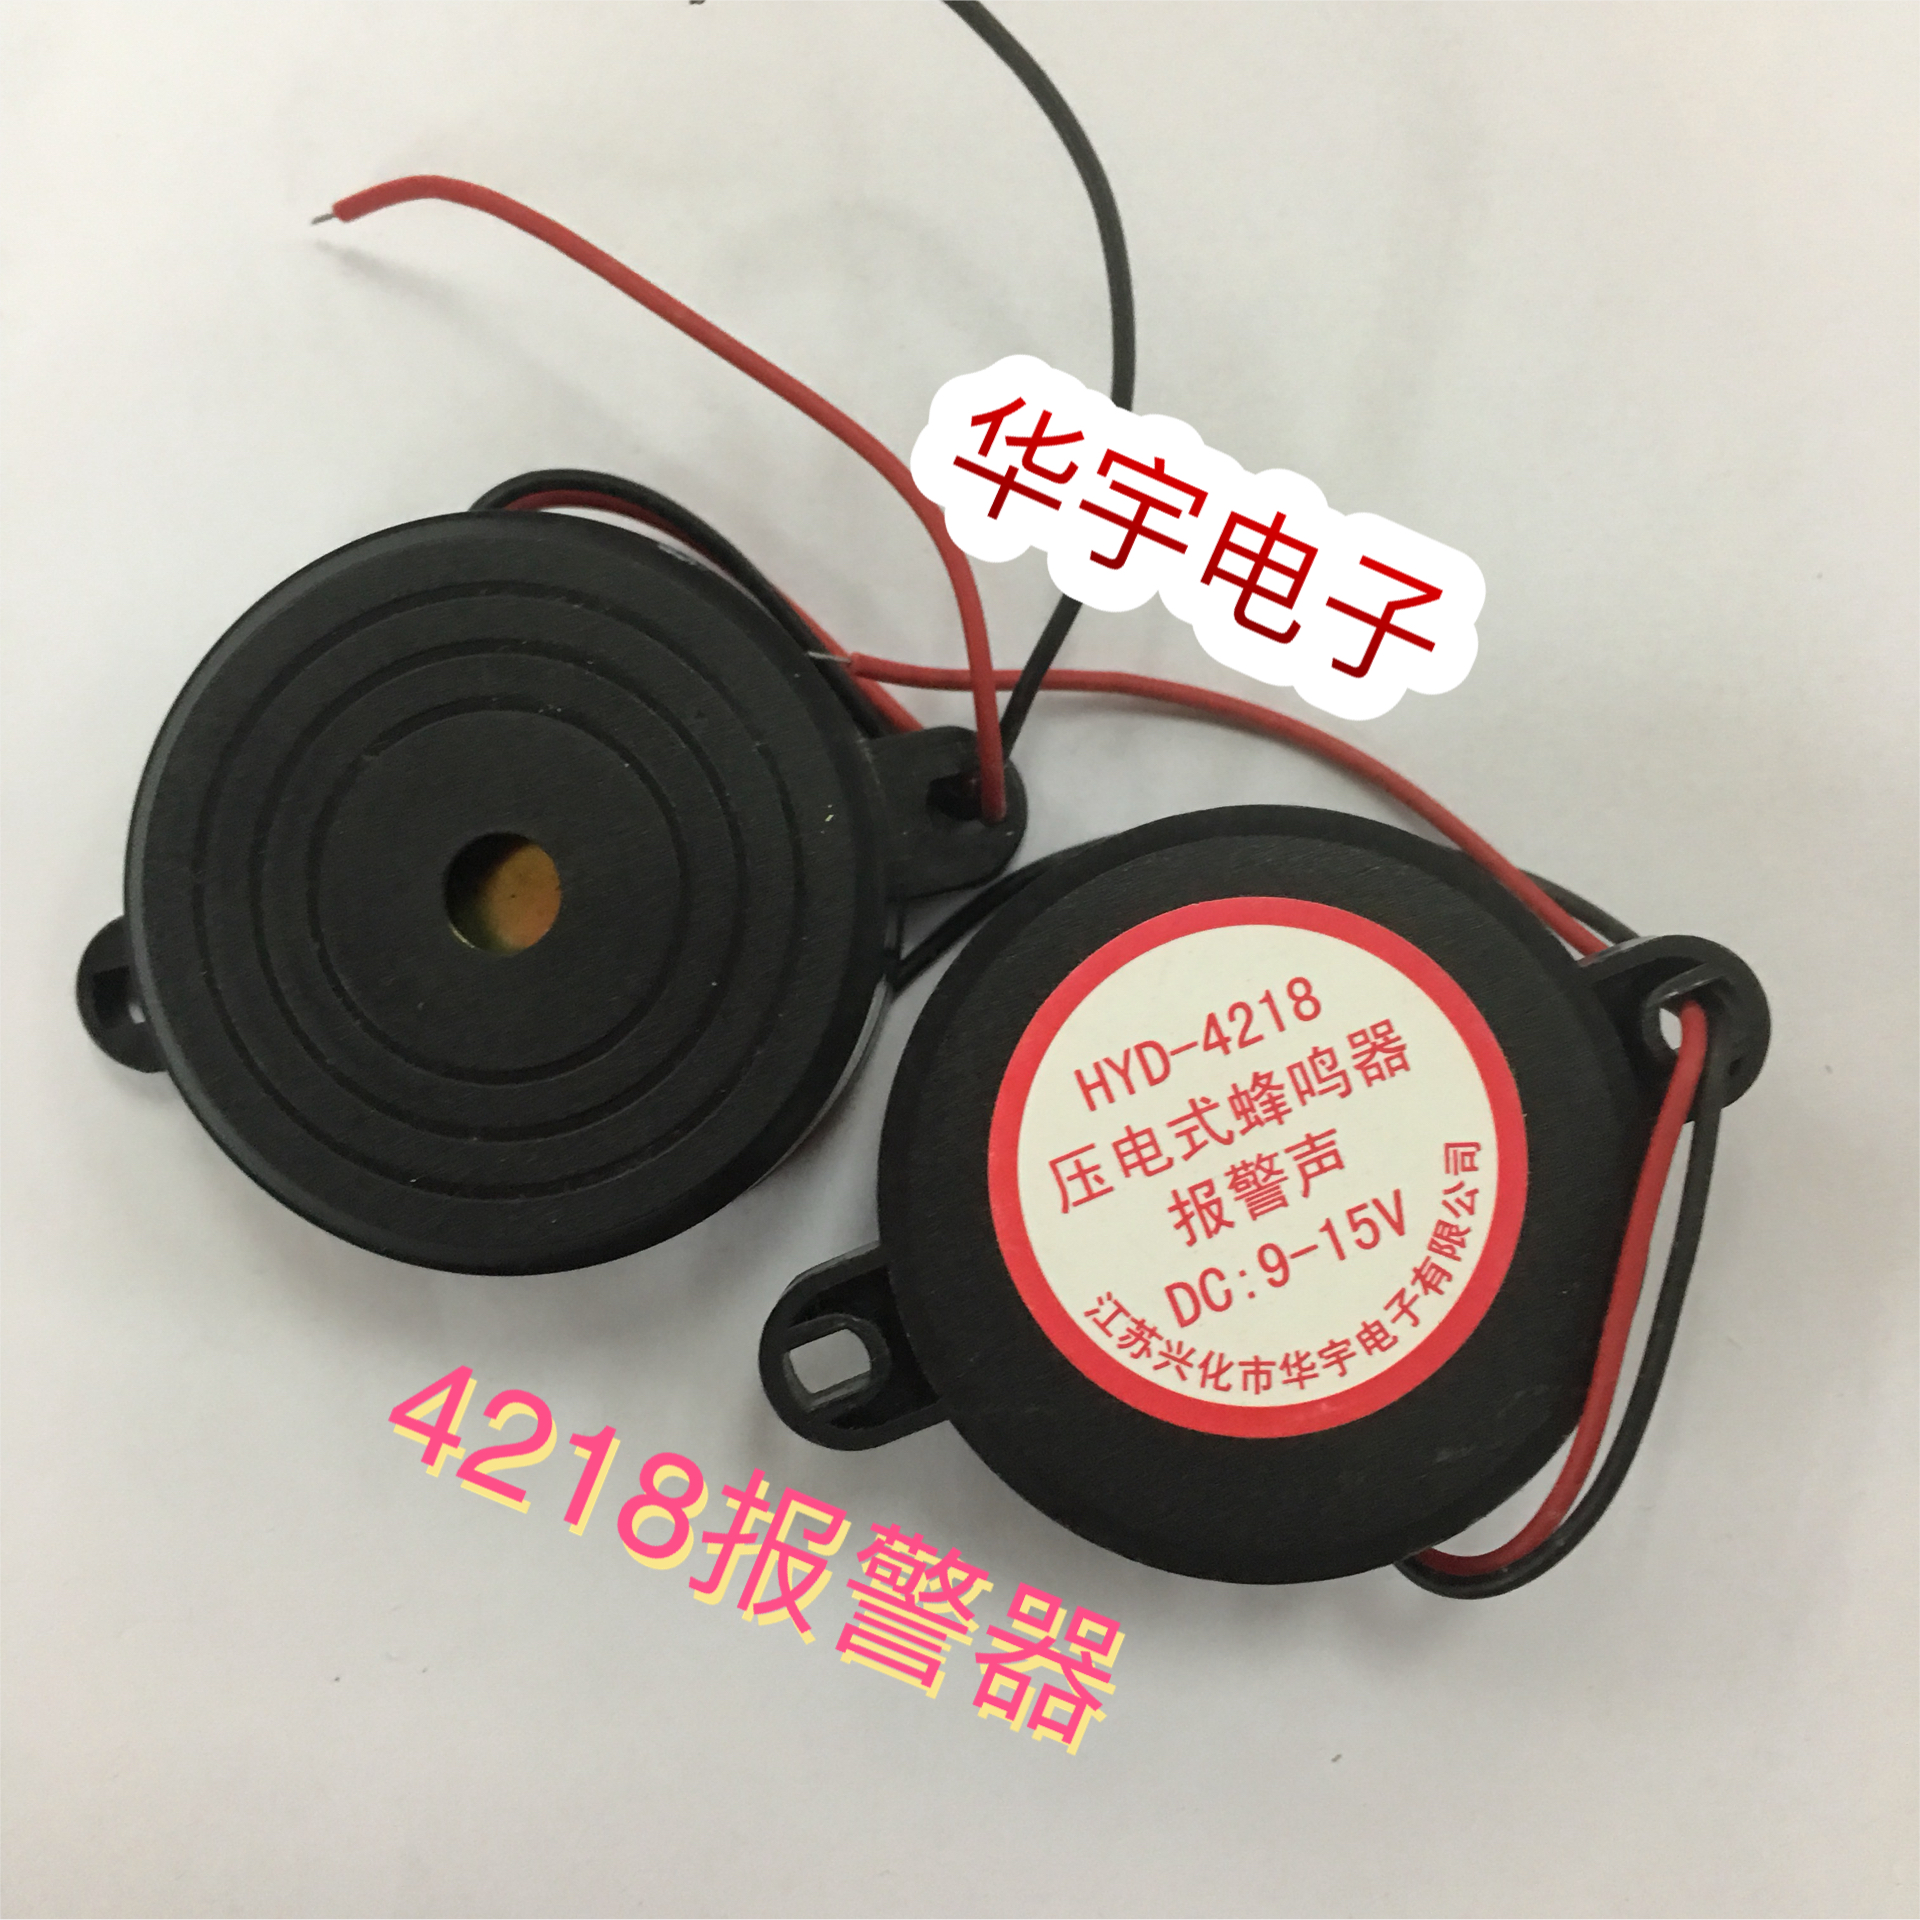 Supply Huayu brand HYD-4218 piezoelectric active 9-15V alarm 42MM*18MM buzzer